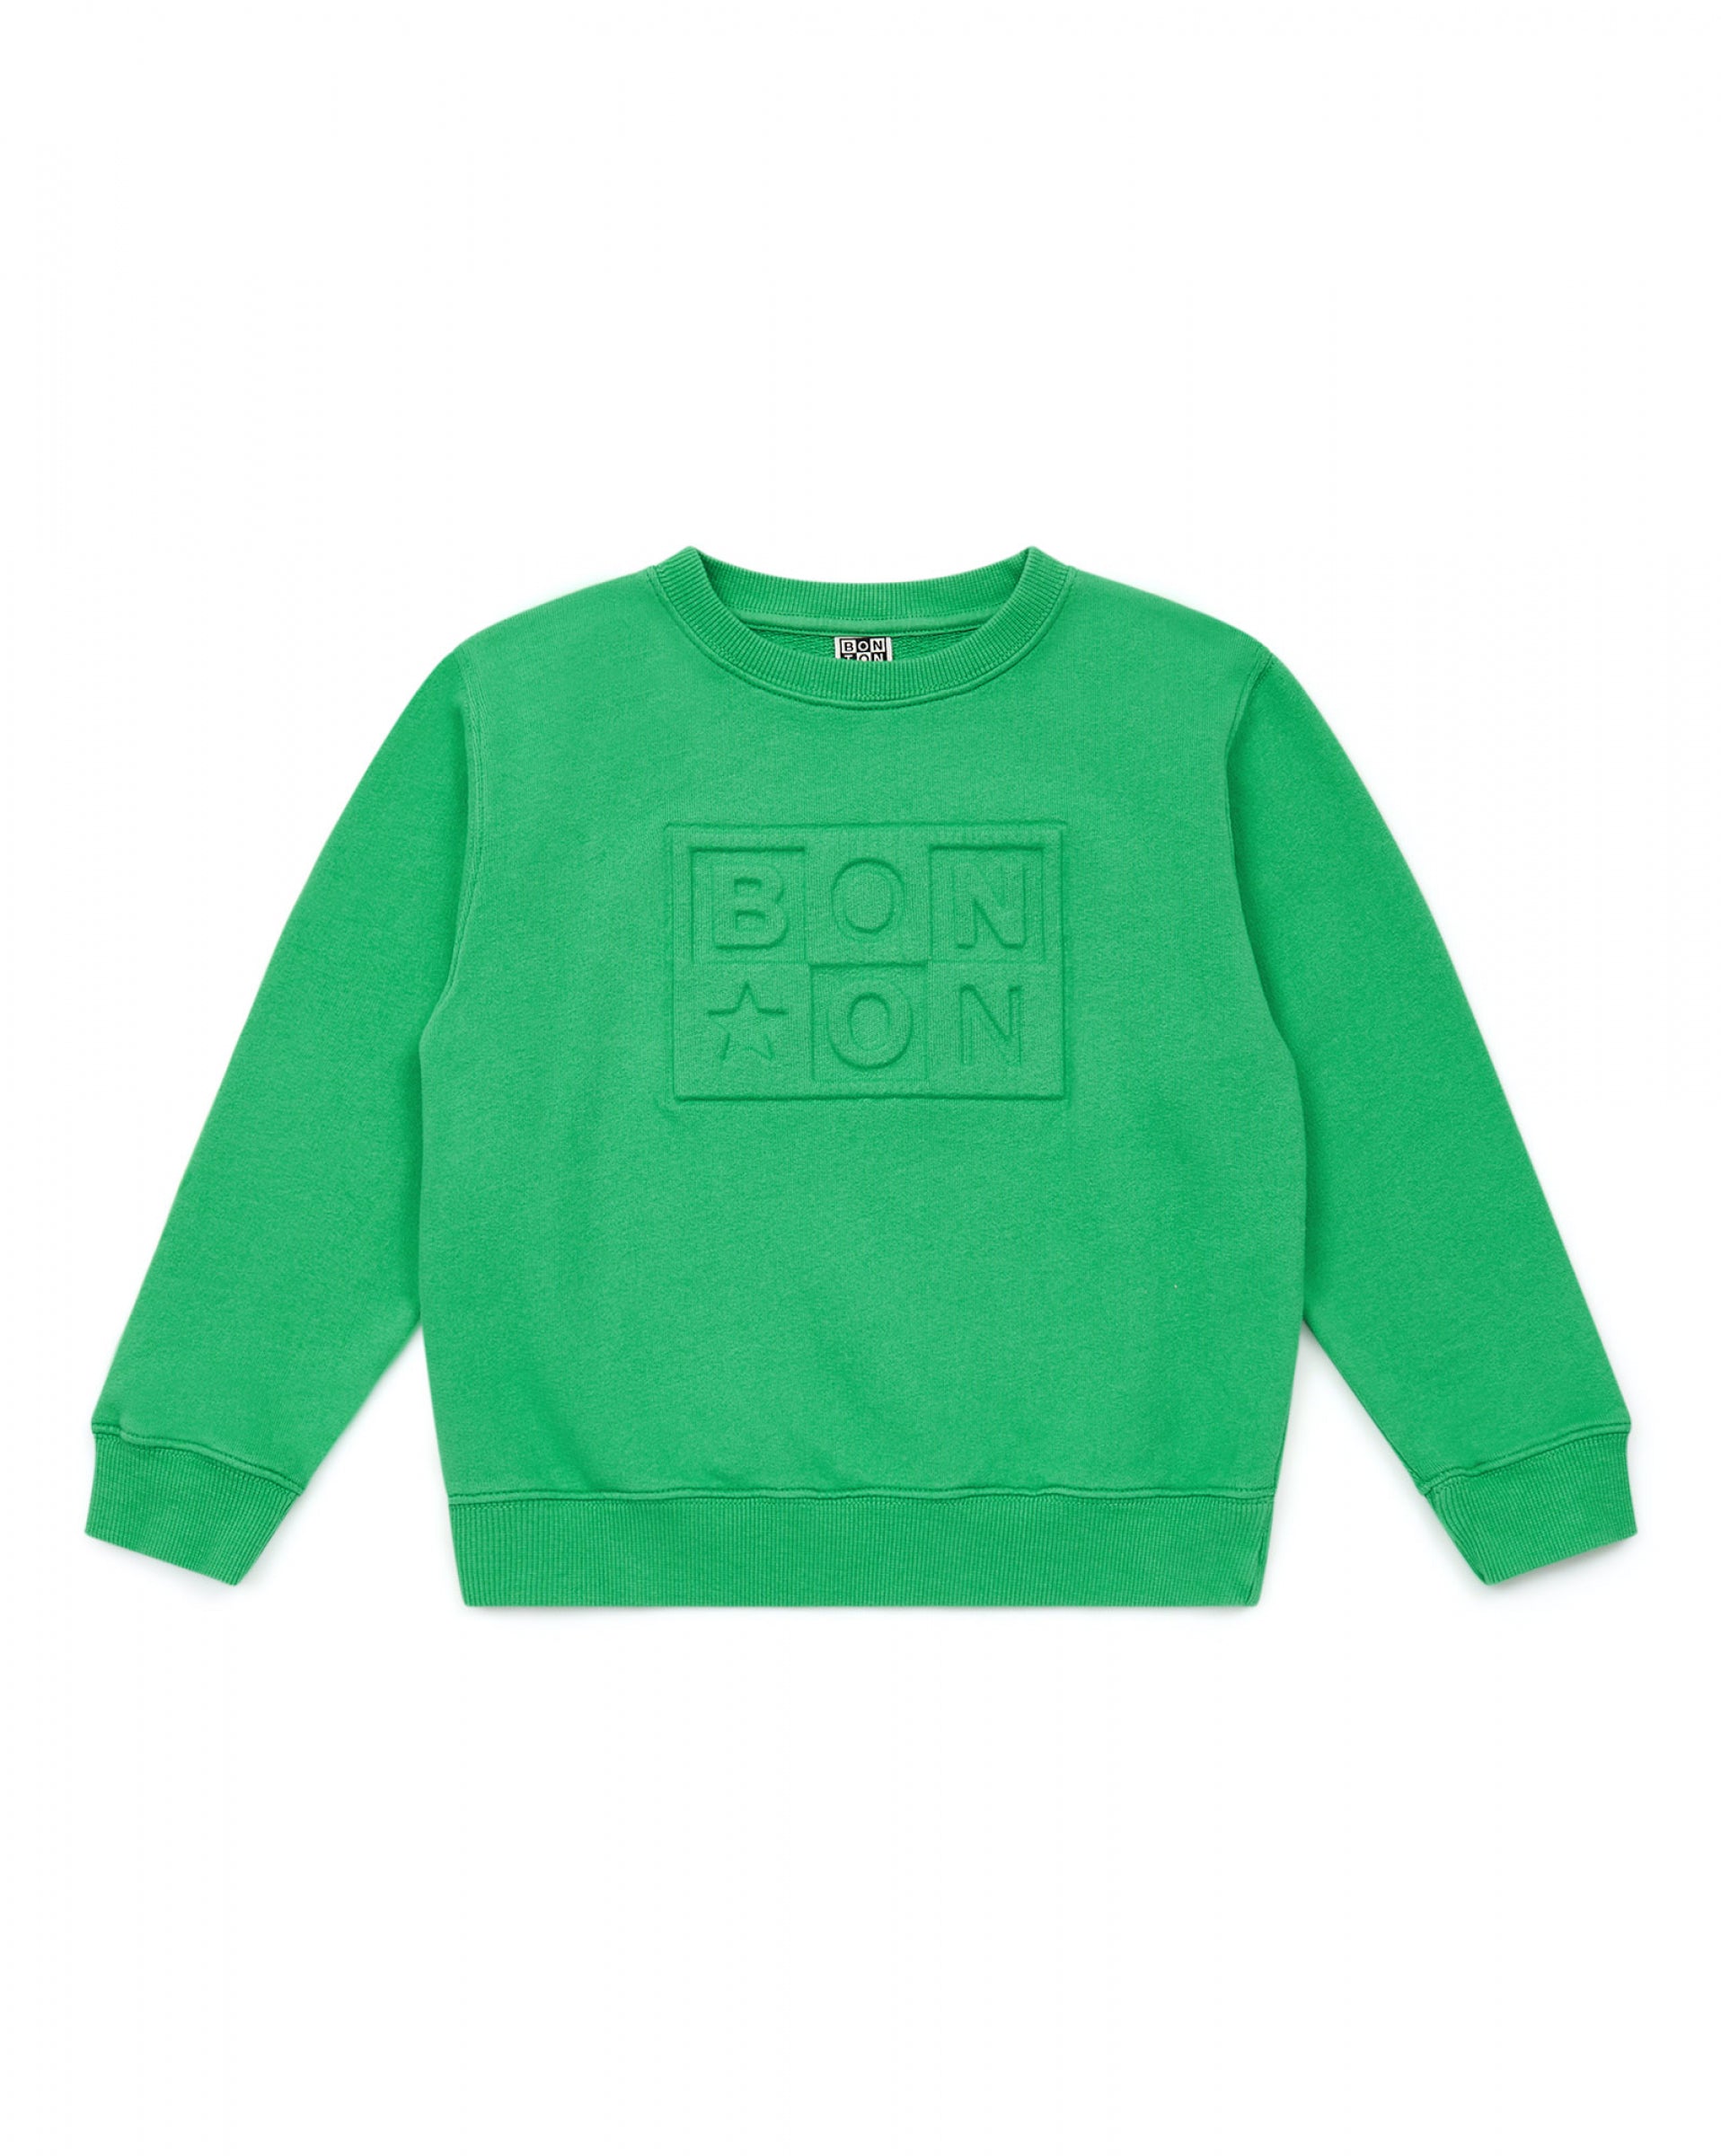 Boys Green Logo Sweatshirt